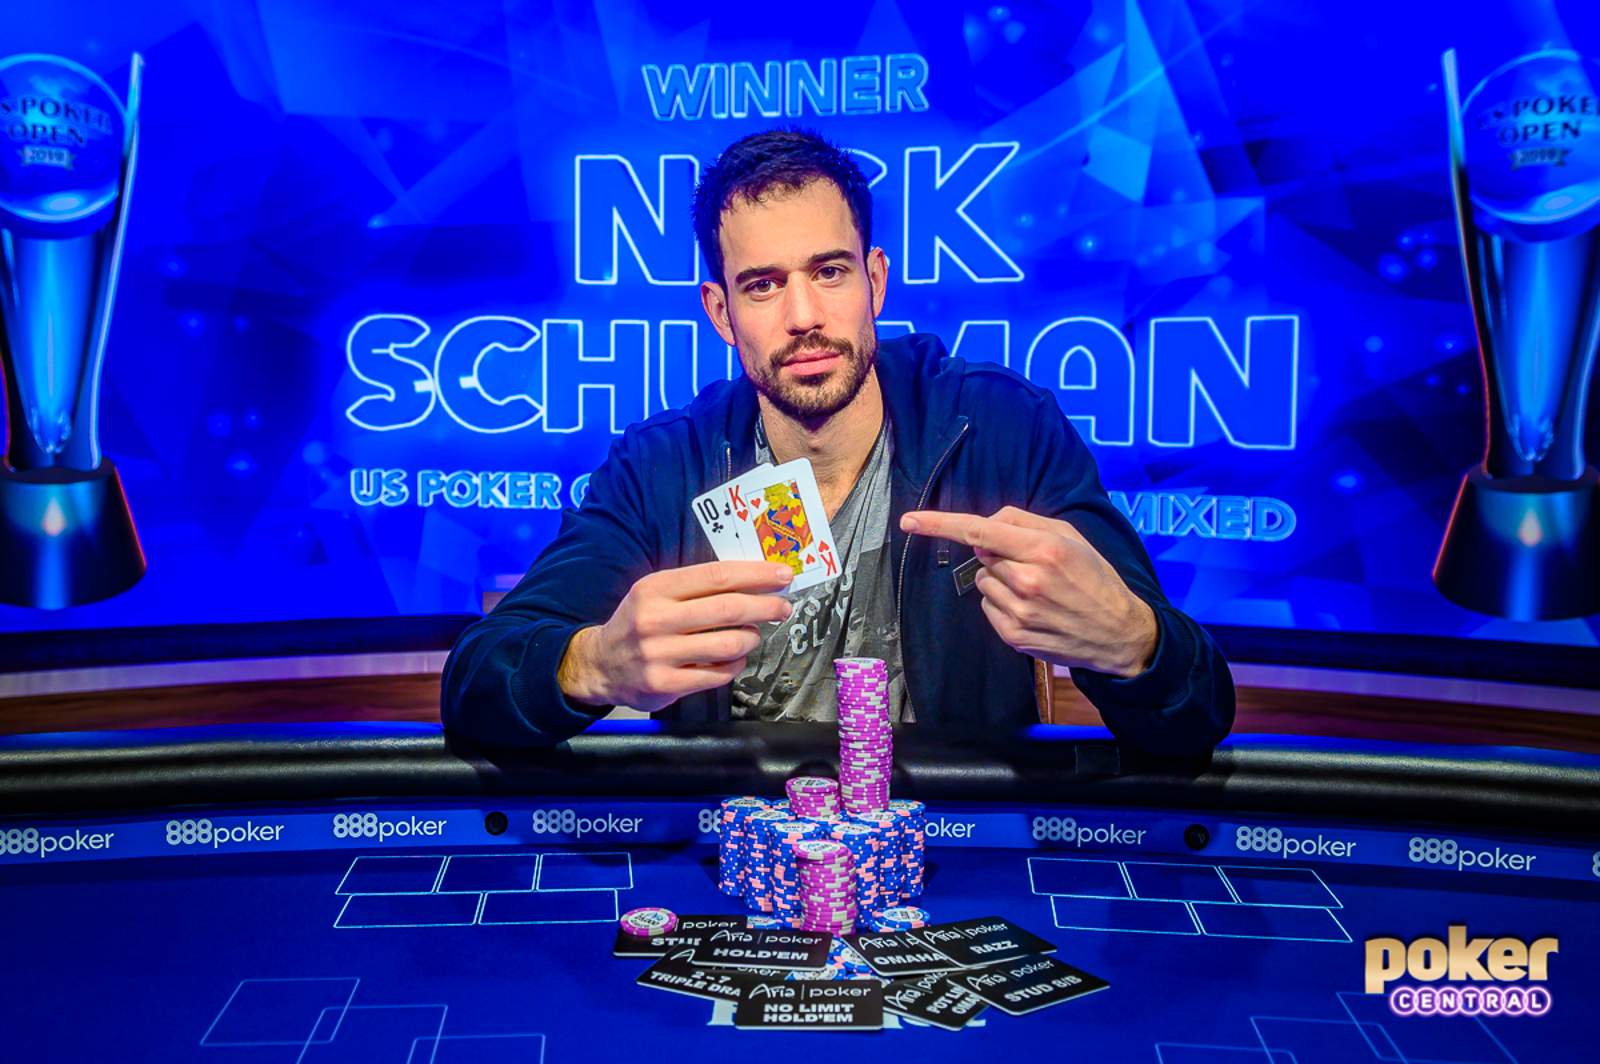 Nick Schulman Wins U.S. Poker Open Mixed Game Championship ($270,000)